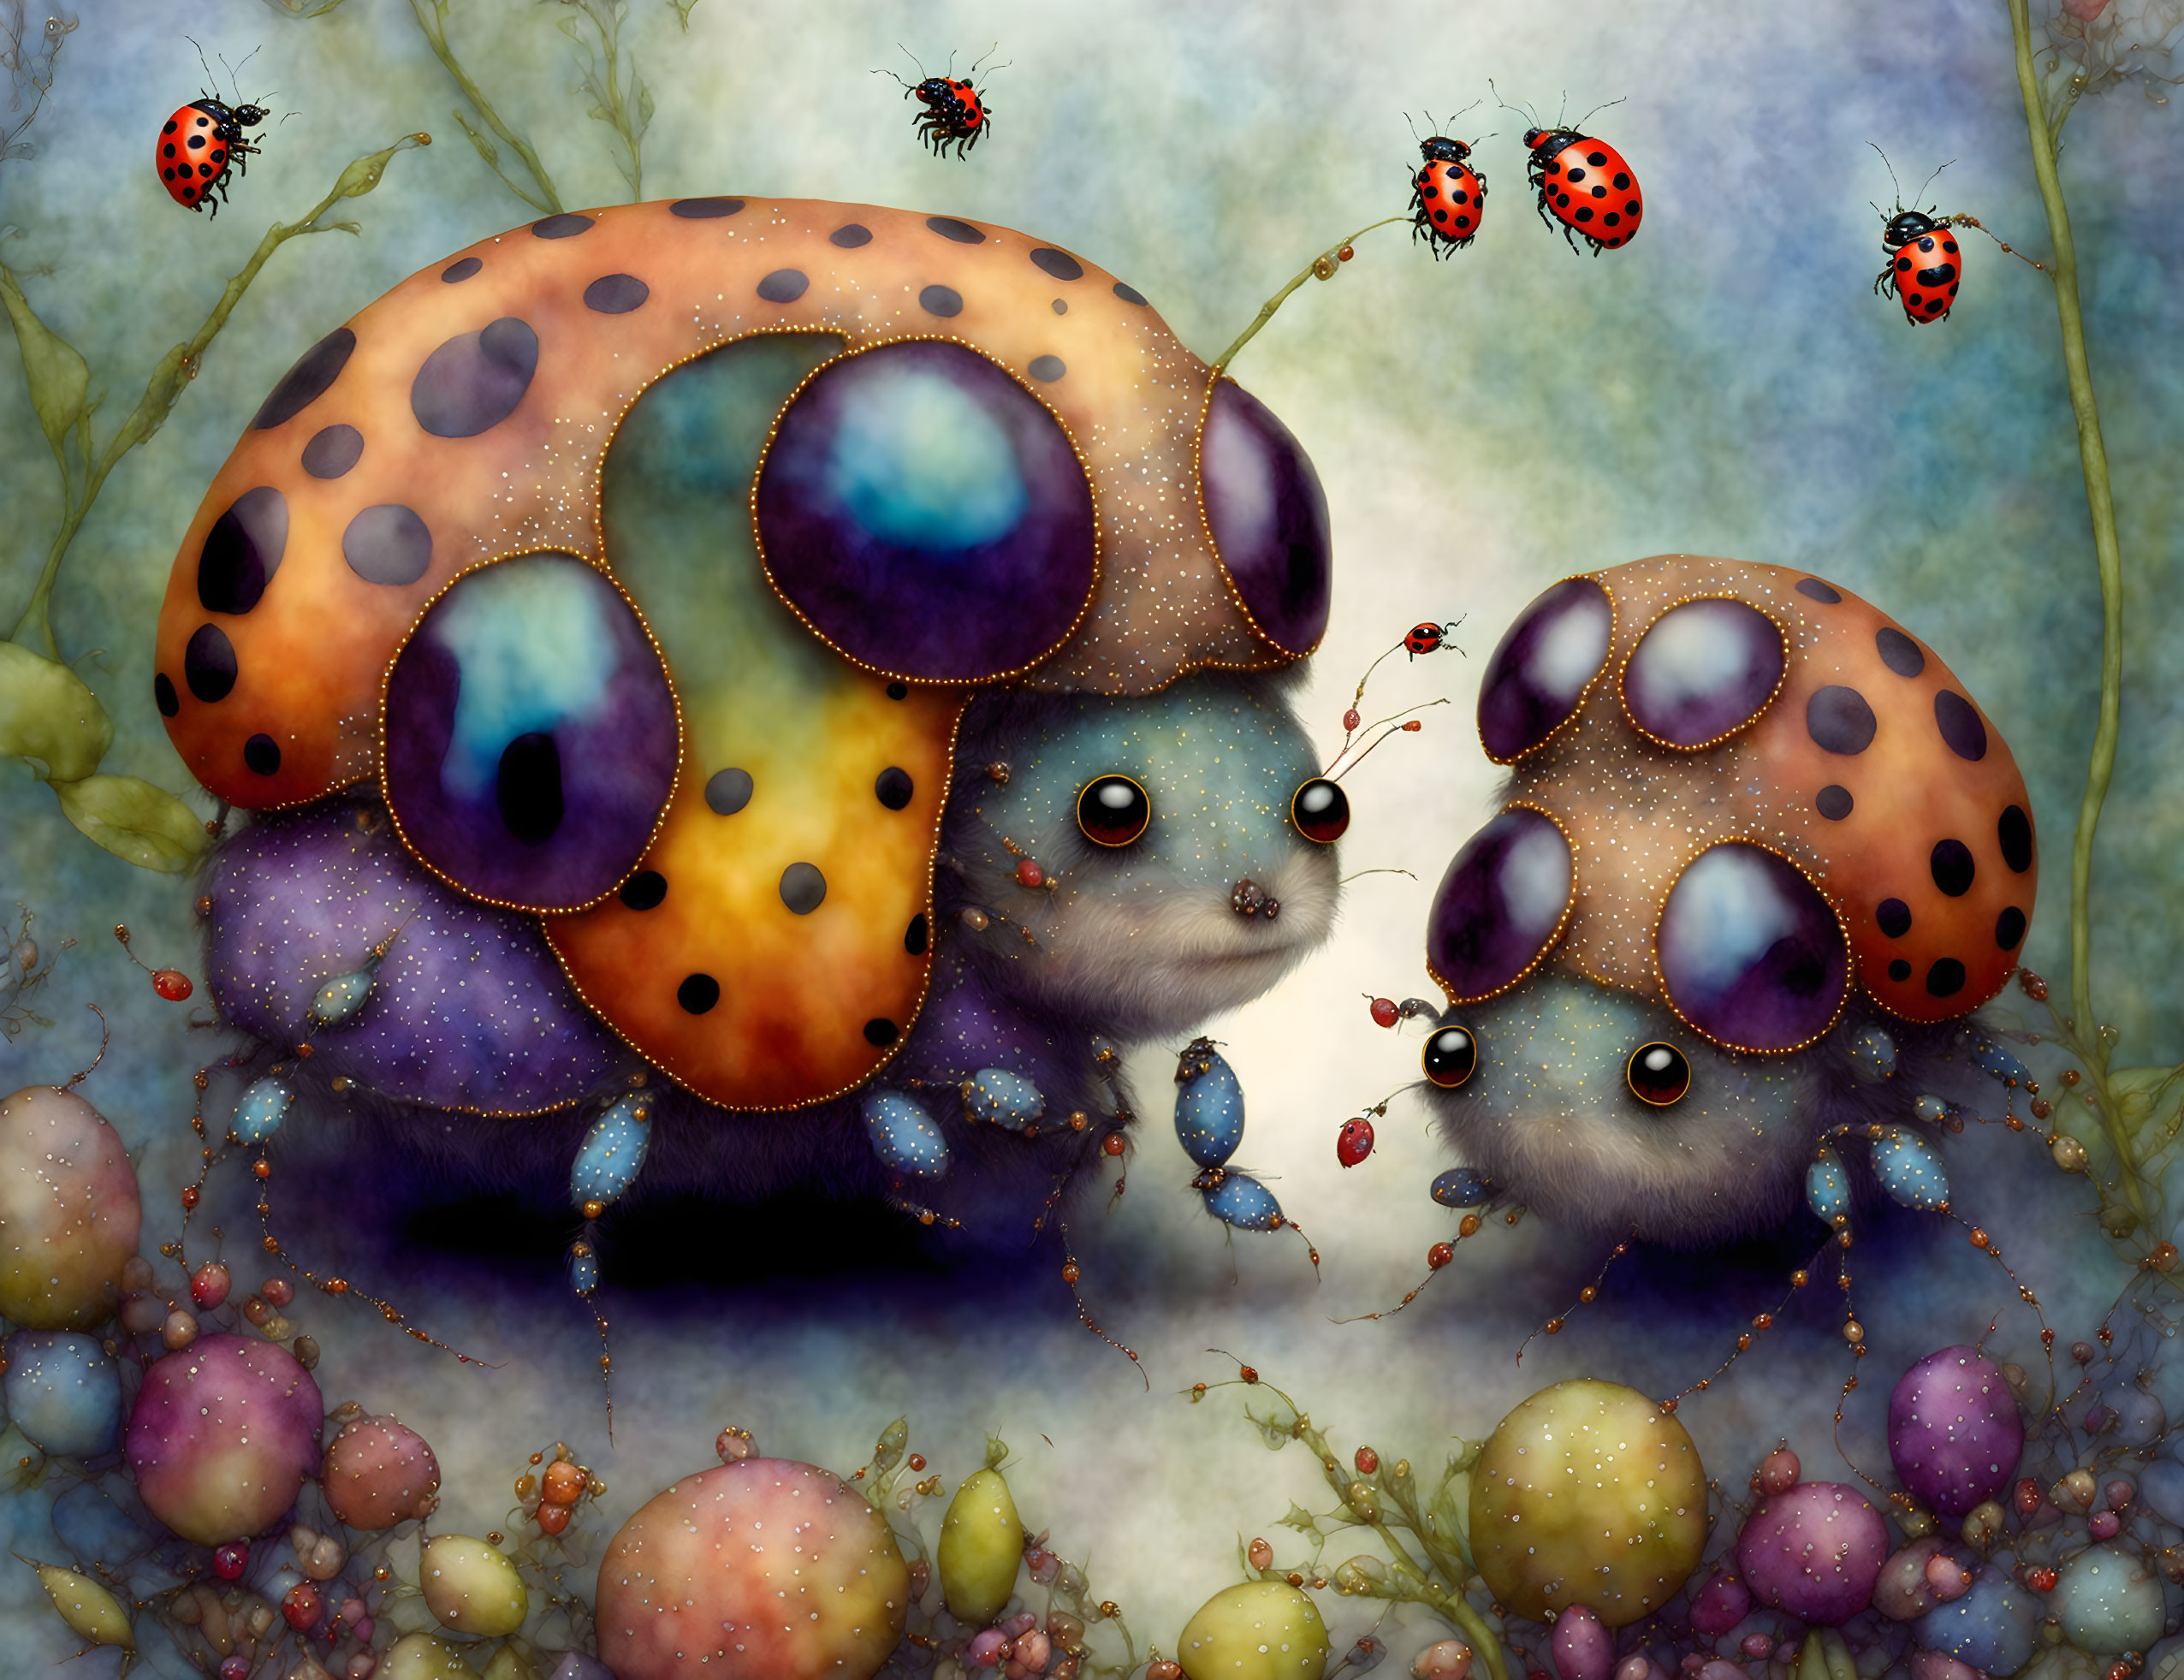 Fantasy illustration: Mouse creatures, mushrooms, ladybugs, colorful bubbles